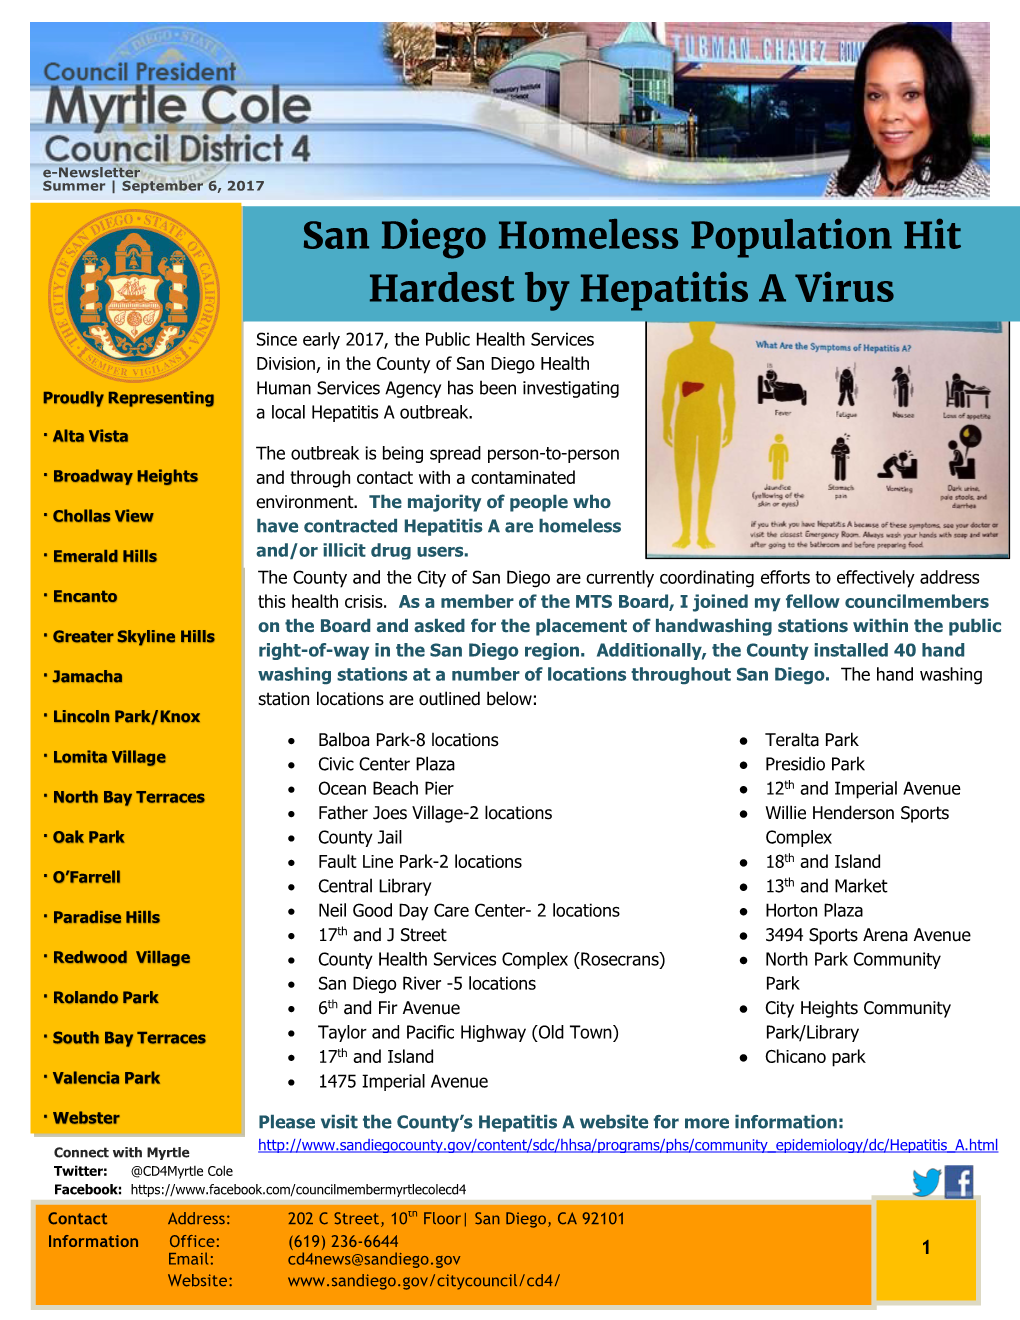 San Diego Homeless Population Hit Hardest by Hepatitis a Virus